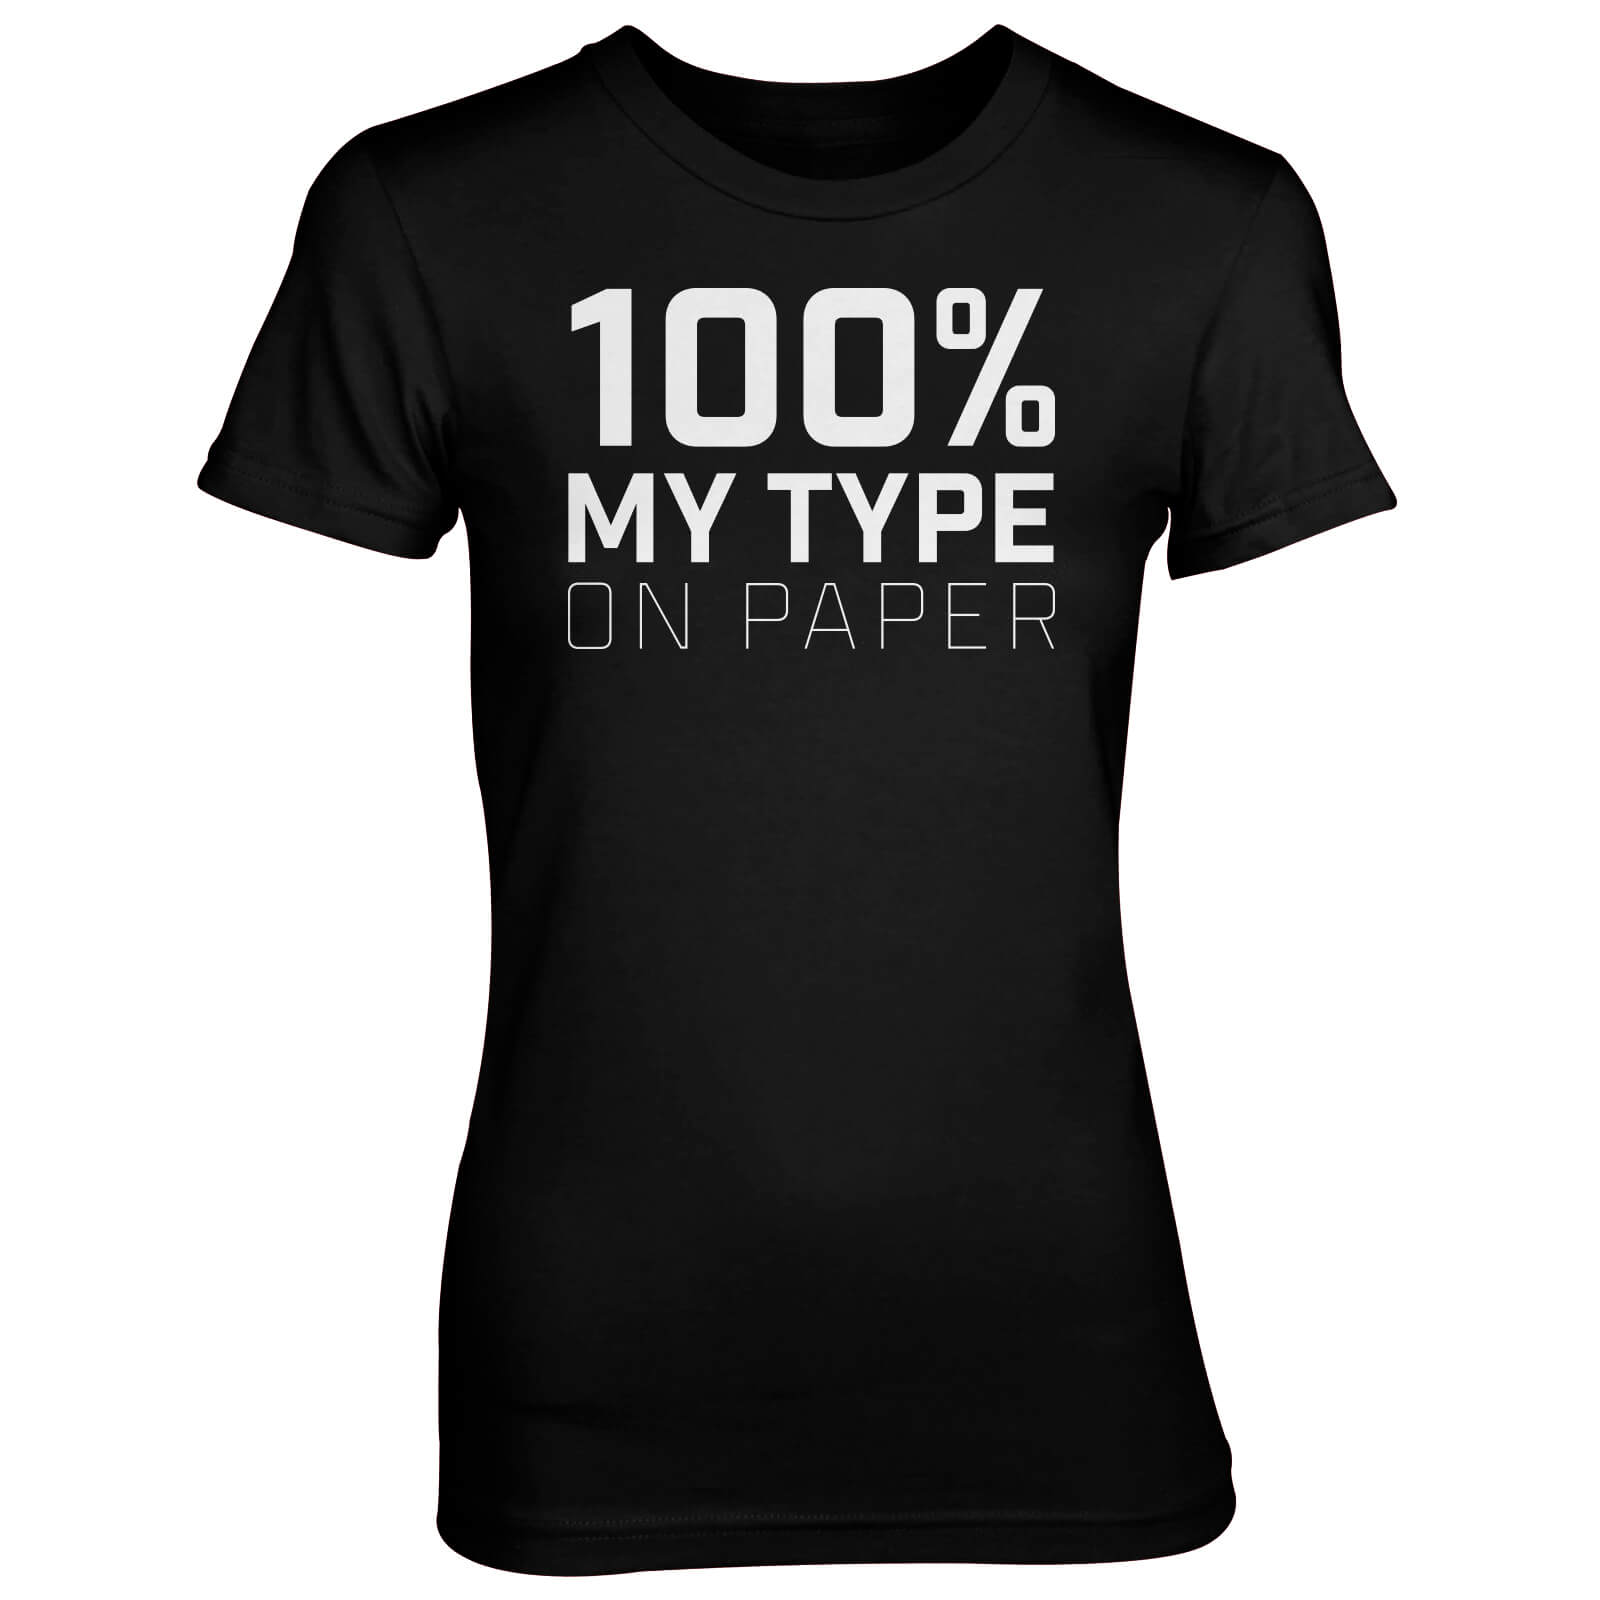 100% My Type On Paper Women's Black T-Shirt - S - Black